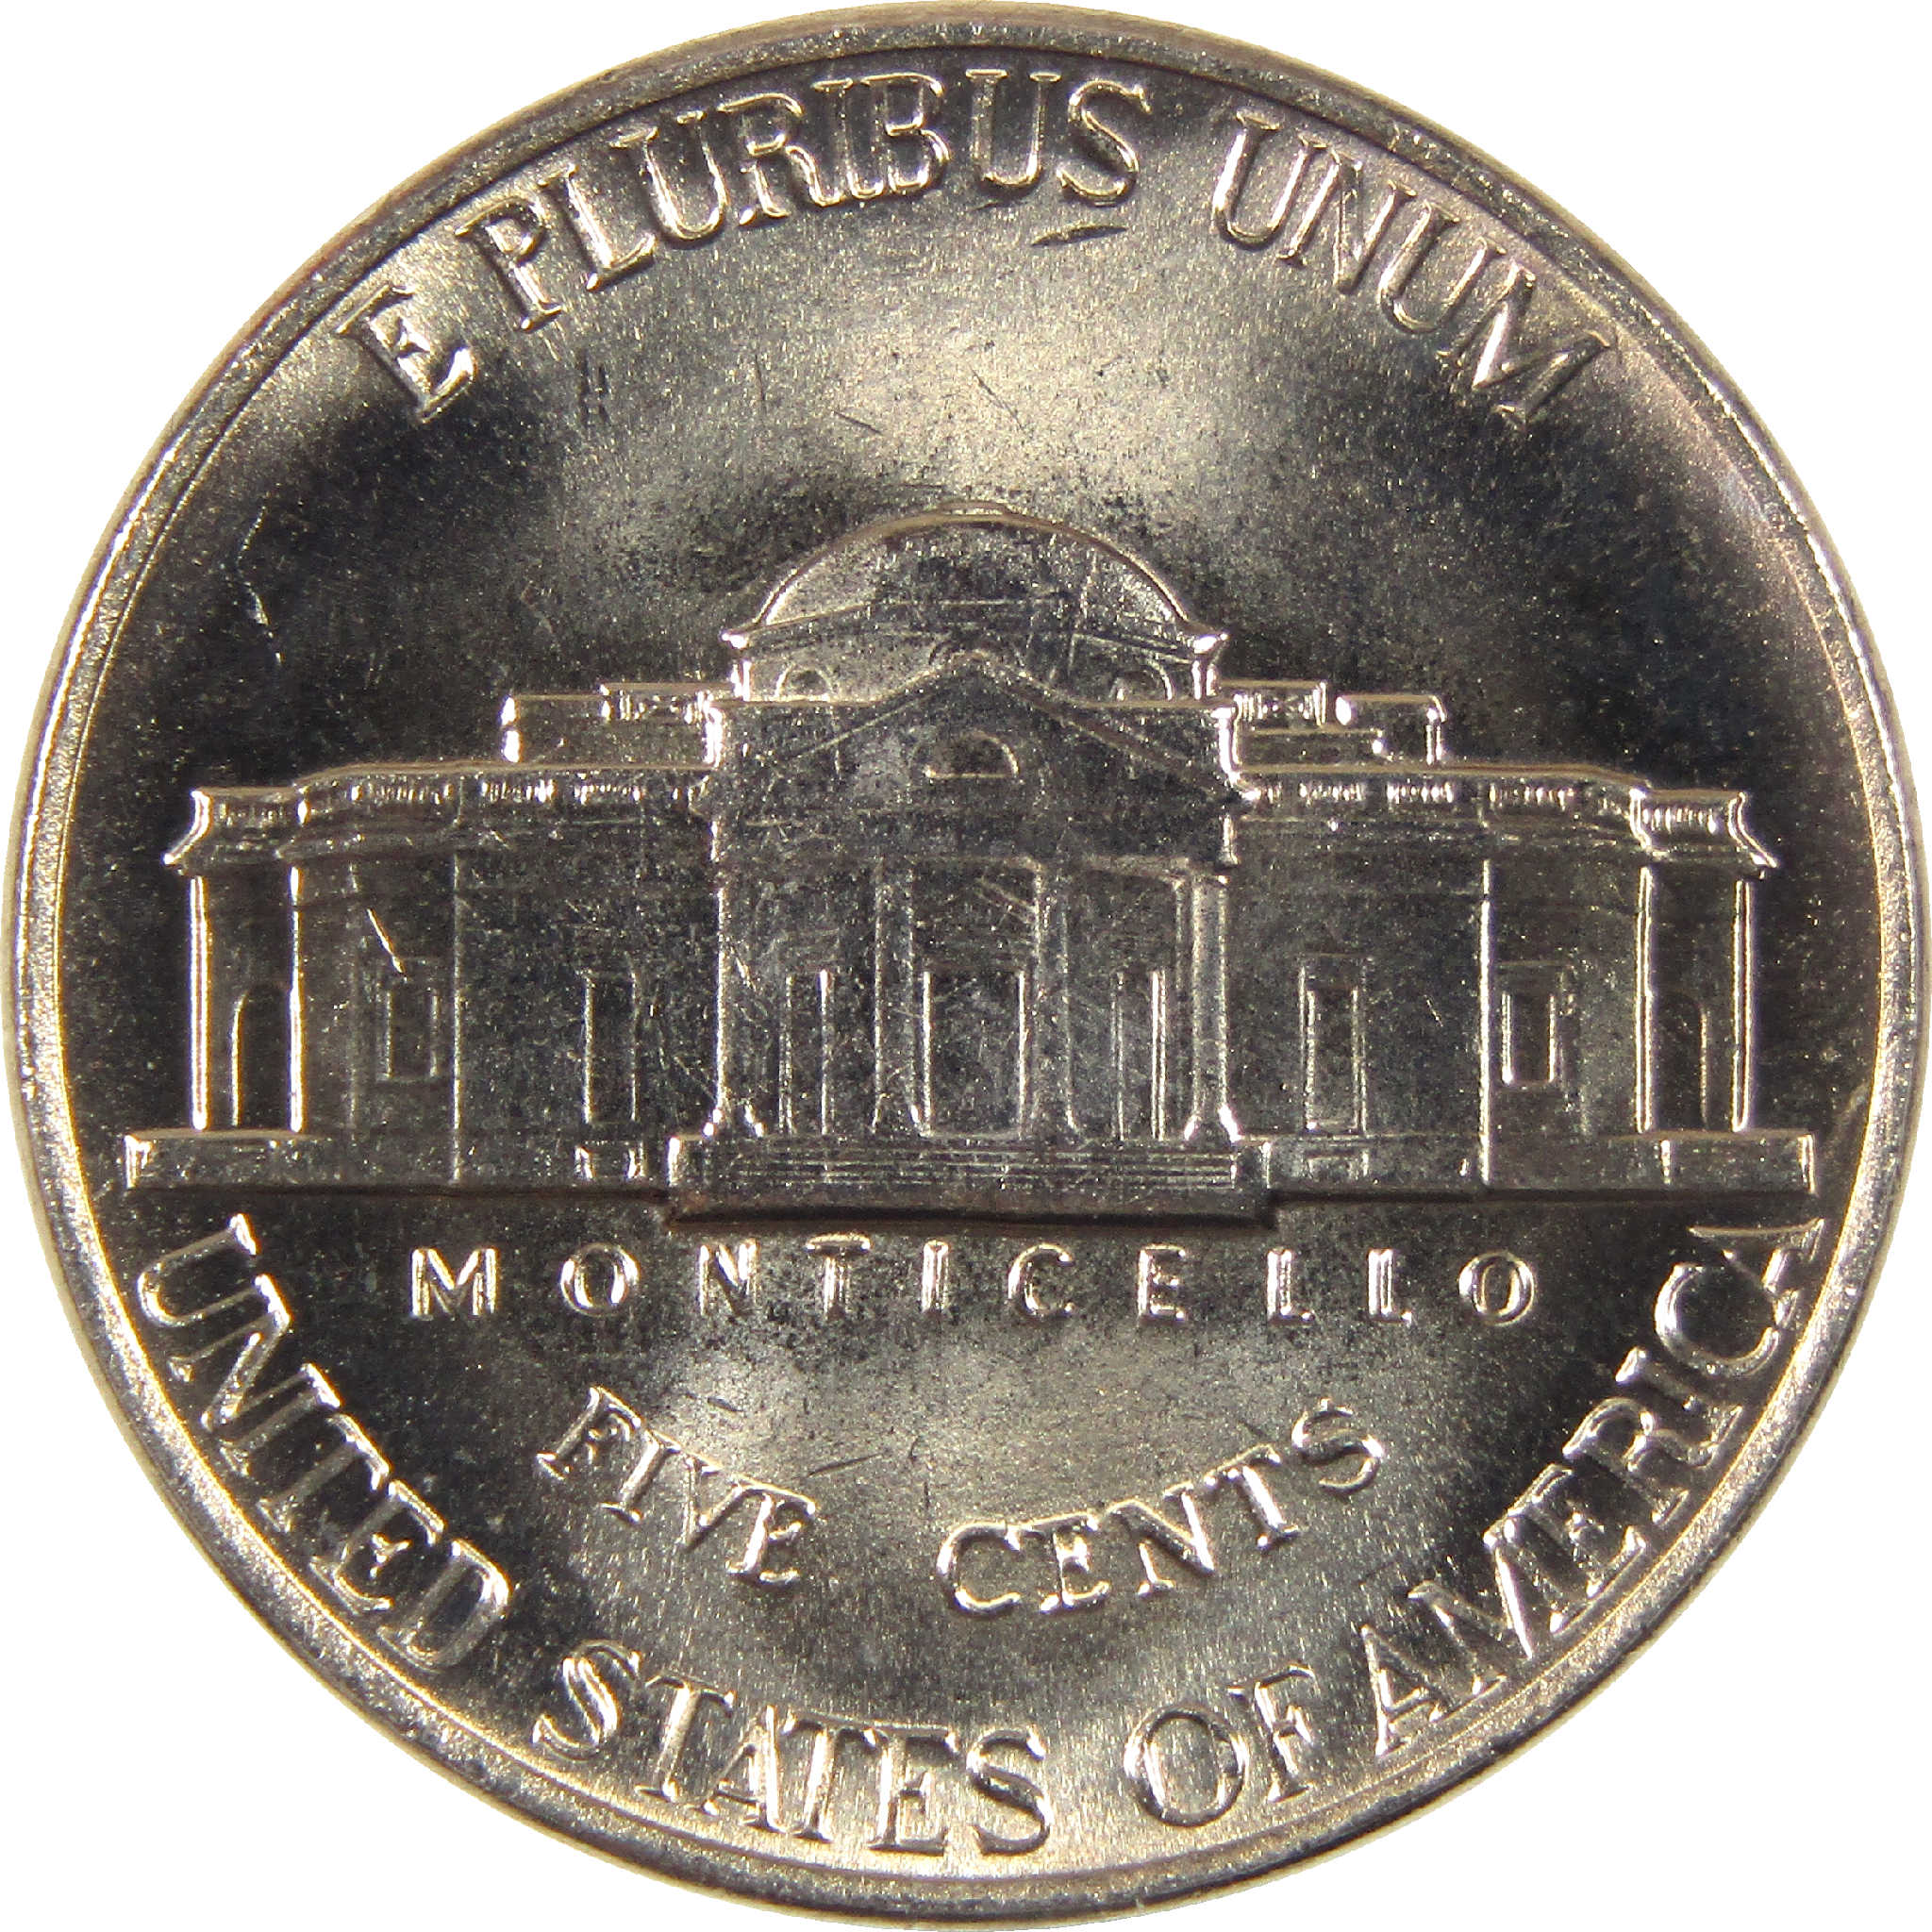 1990 D Jefferson Nickel BU Uncirculated 5c Coin